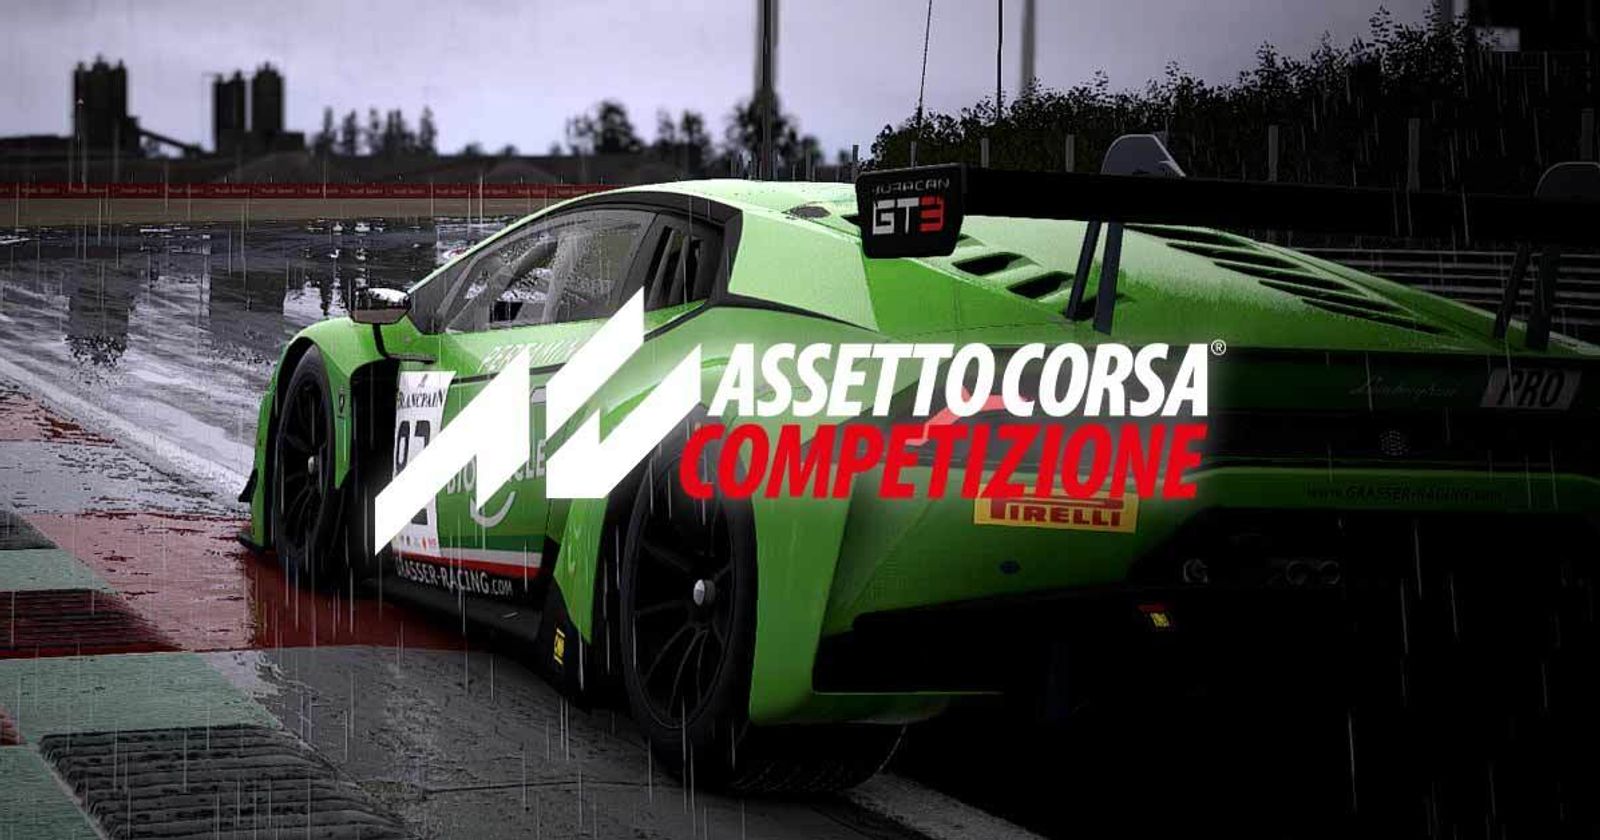 Assetto Corsa won't be beaten (likely) 